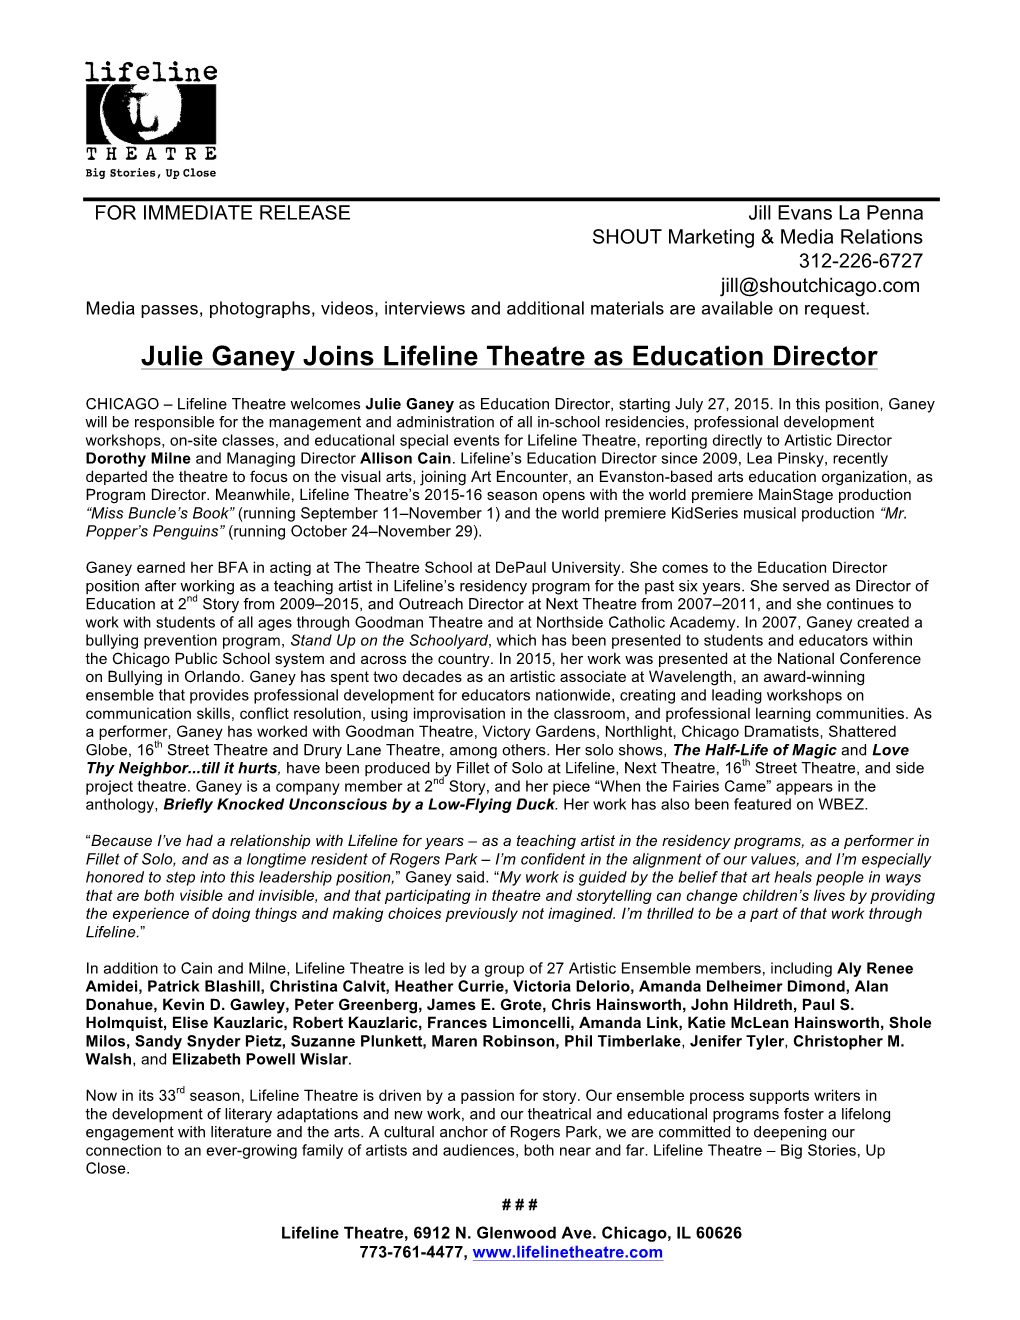 Julie Ganey Joins Lifeline Theatre As Education Director